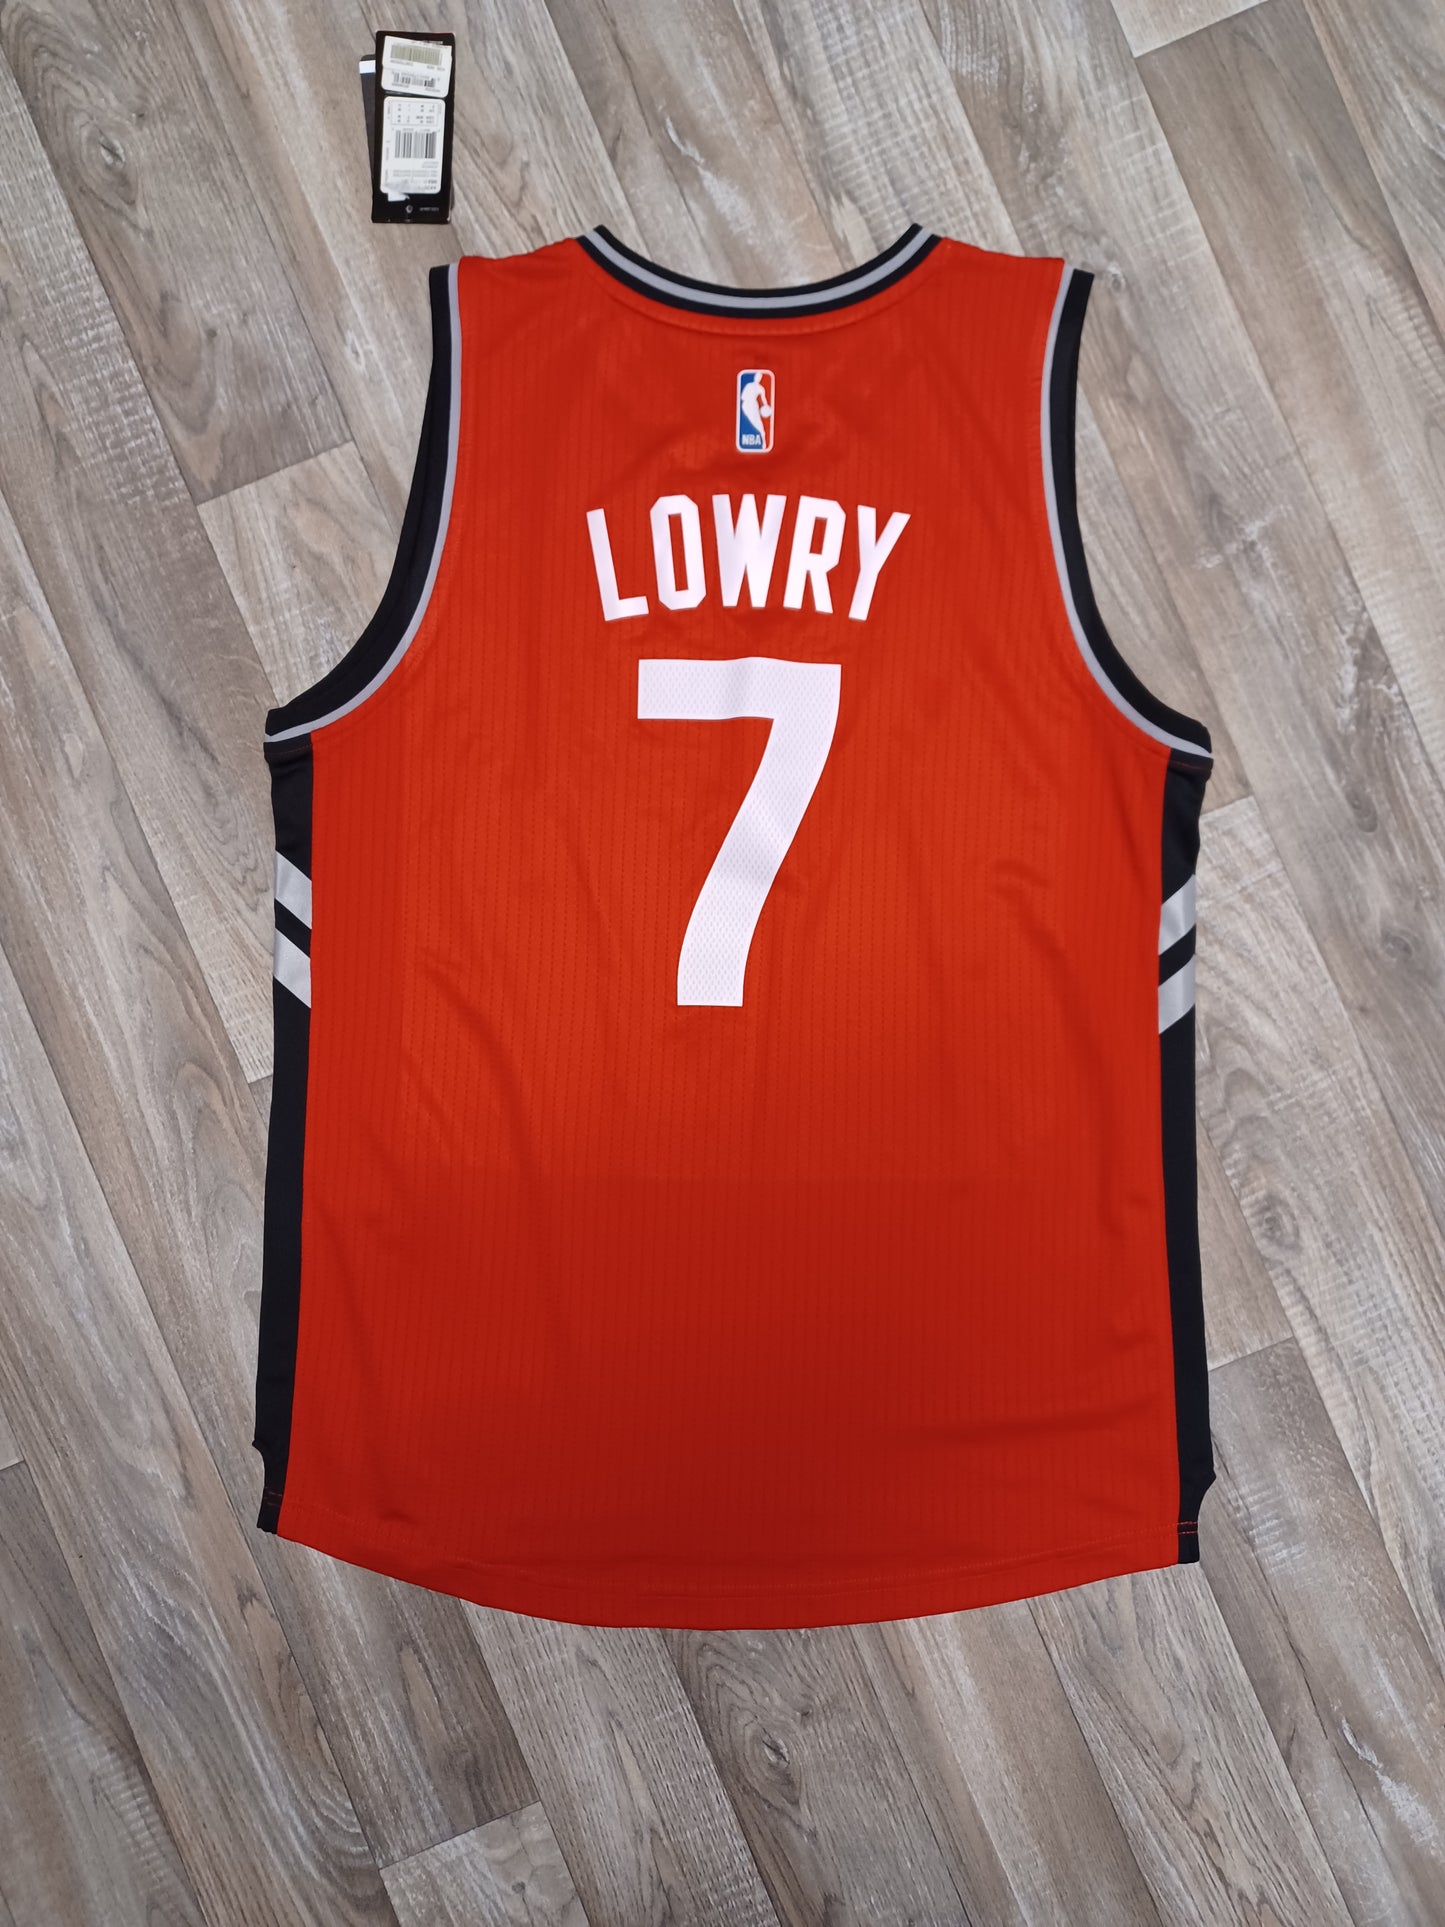 Kyle Lowry Toronto Raptors Jersey Size Medium